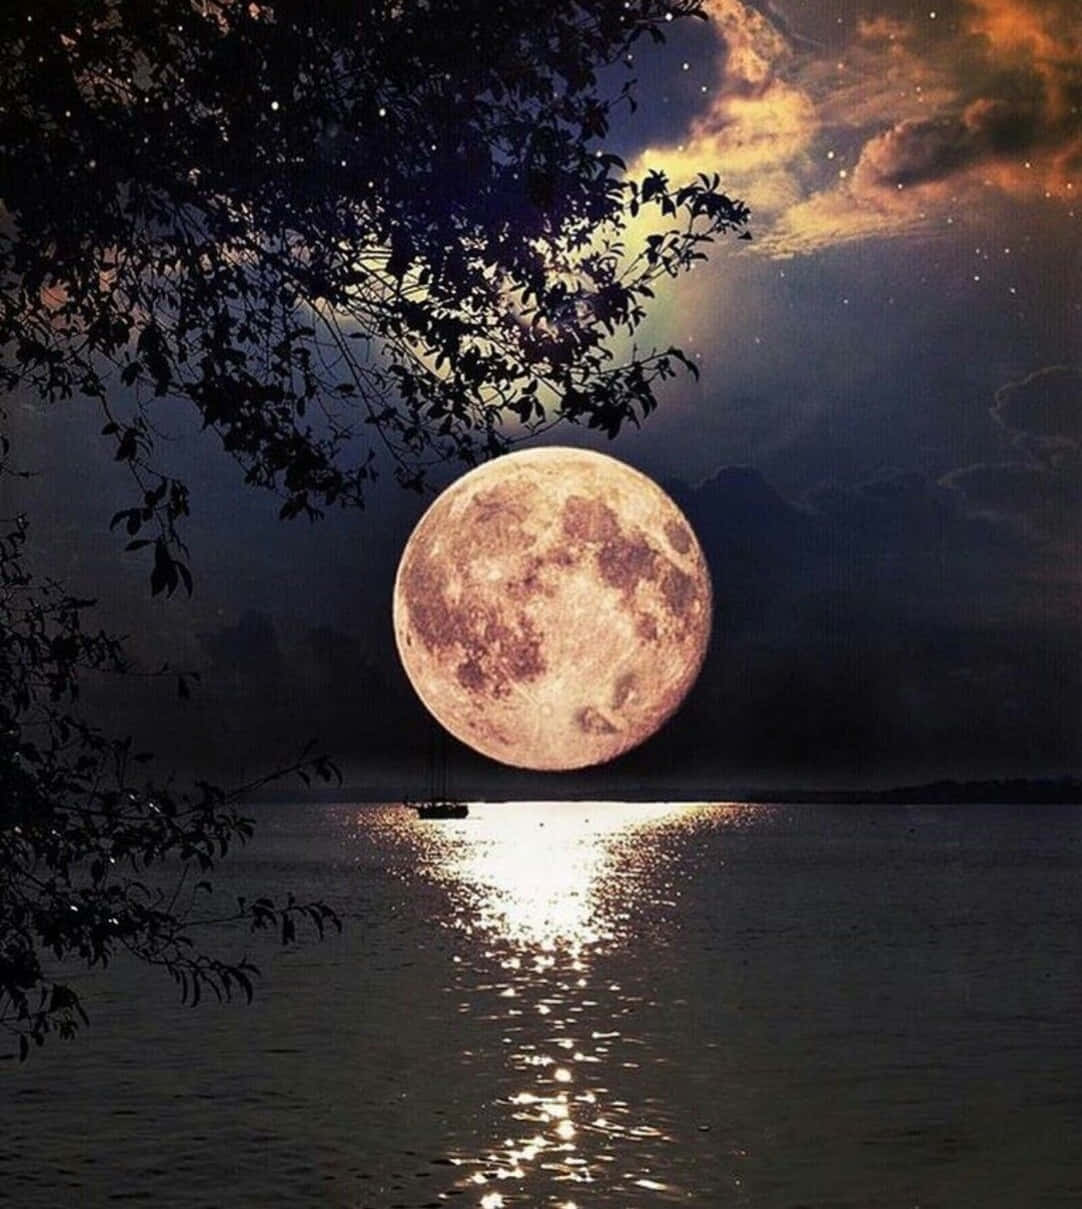 A beautiful moon illuminating a star-filled night sky